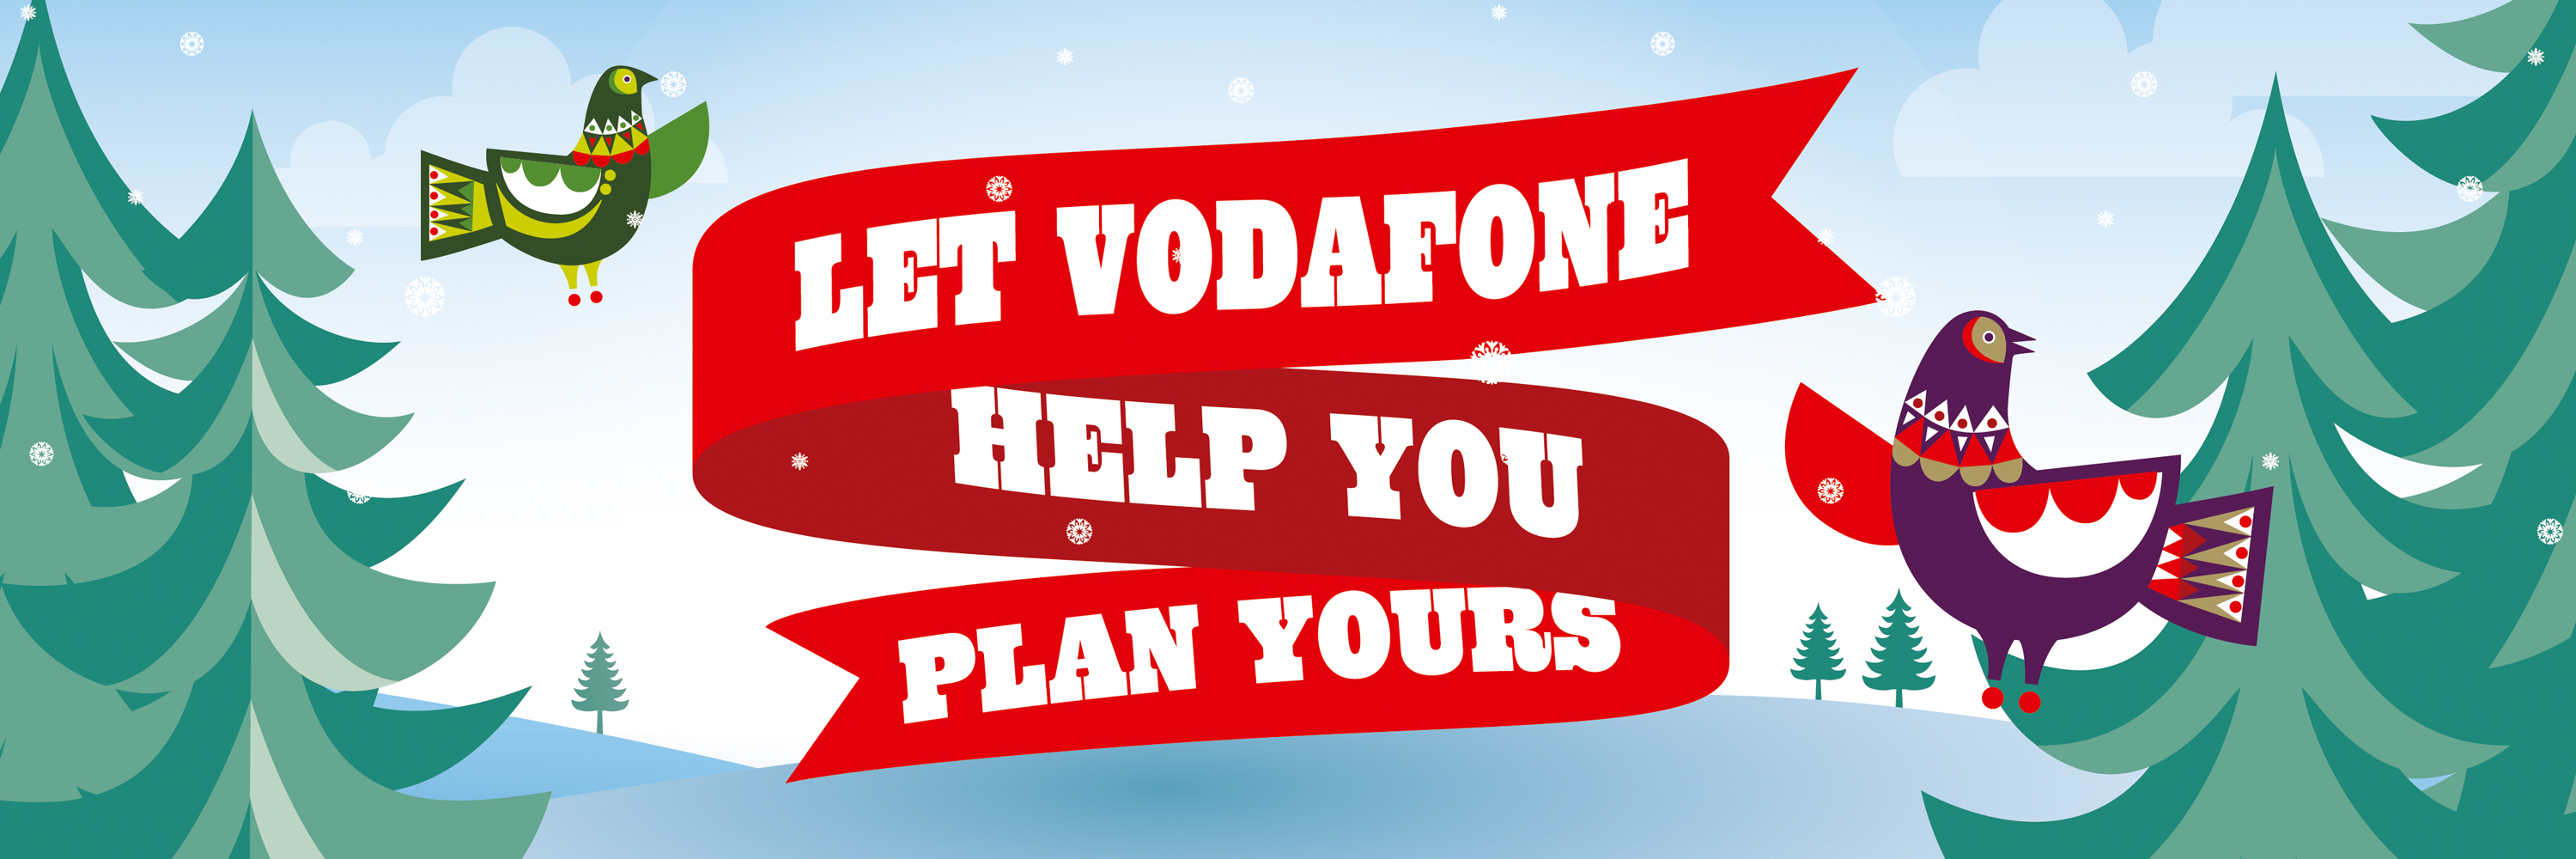 Vodafone Christmas Illustration